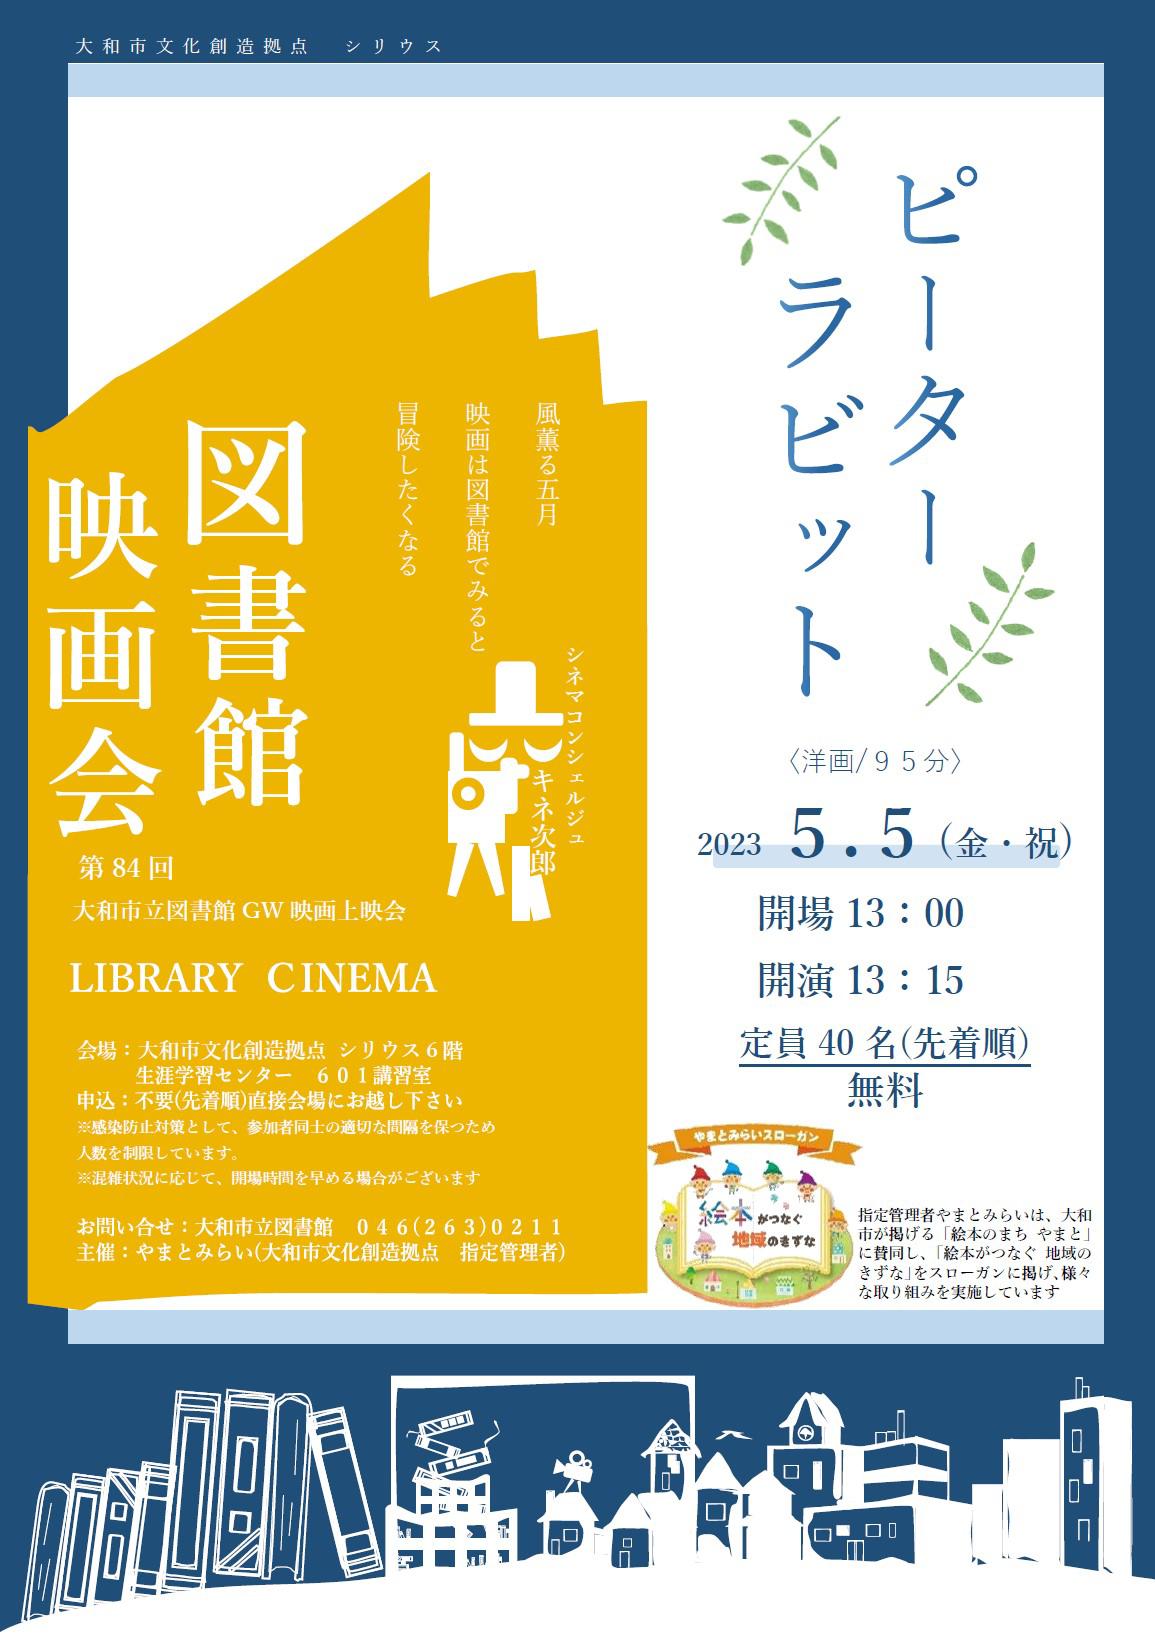 LIBRARY CINEMA第84回大和市立図書館GW映画上映会「ピーターラビット」